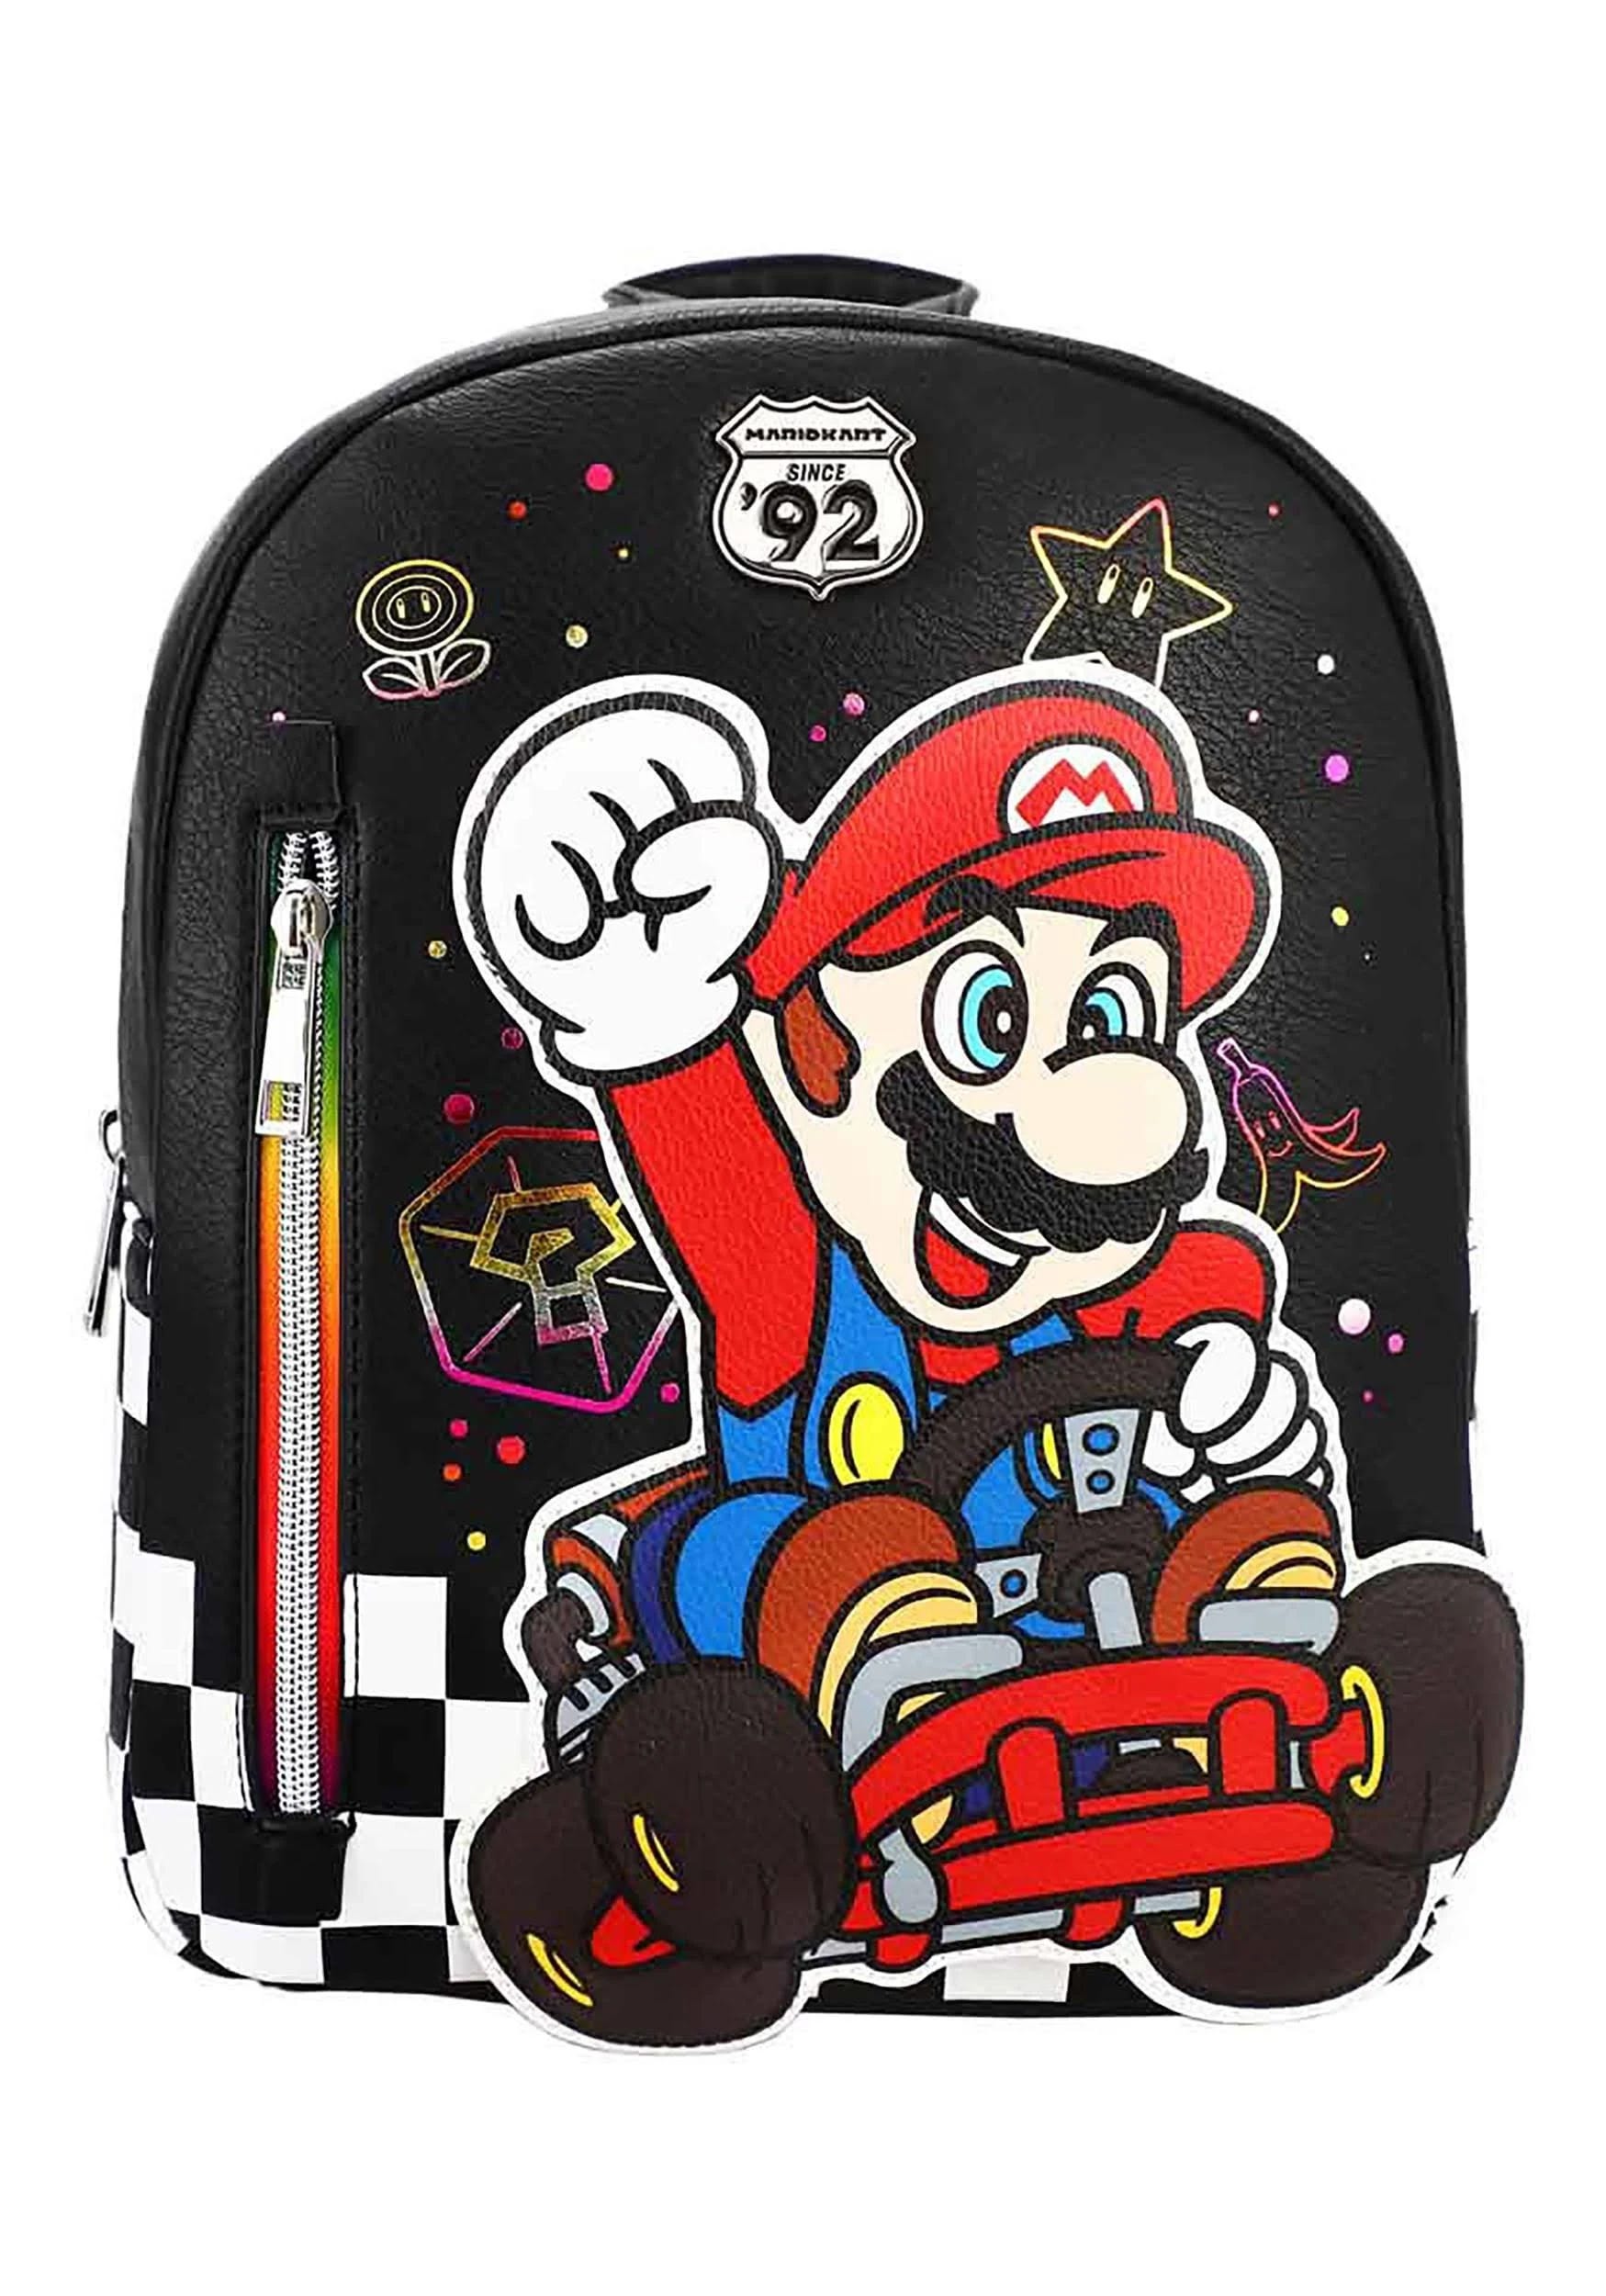 Mario Kart: Rainbow Road Mini Backpack, Officially Licensed, Adjustable Straps | Image